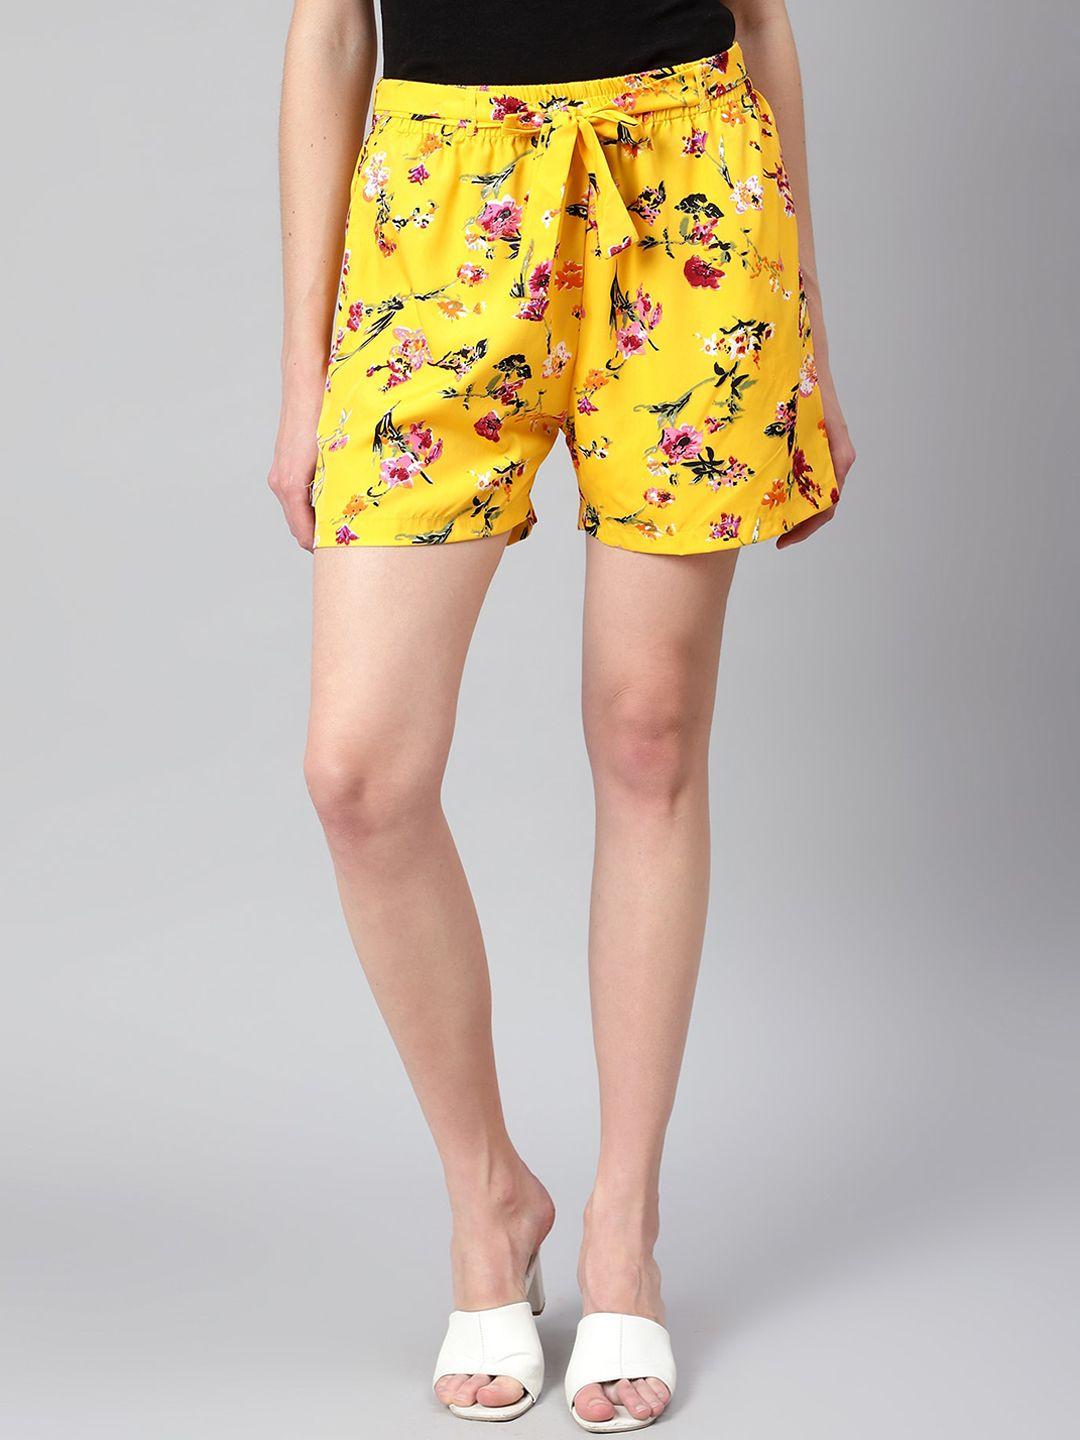 kushi flyer women floral printed shorts